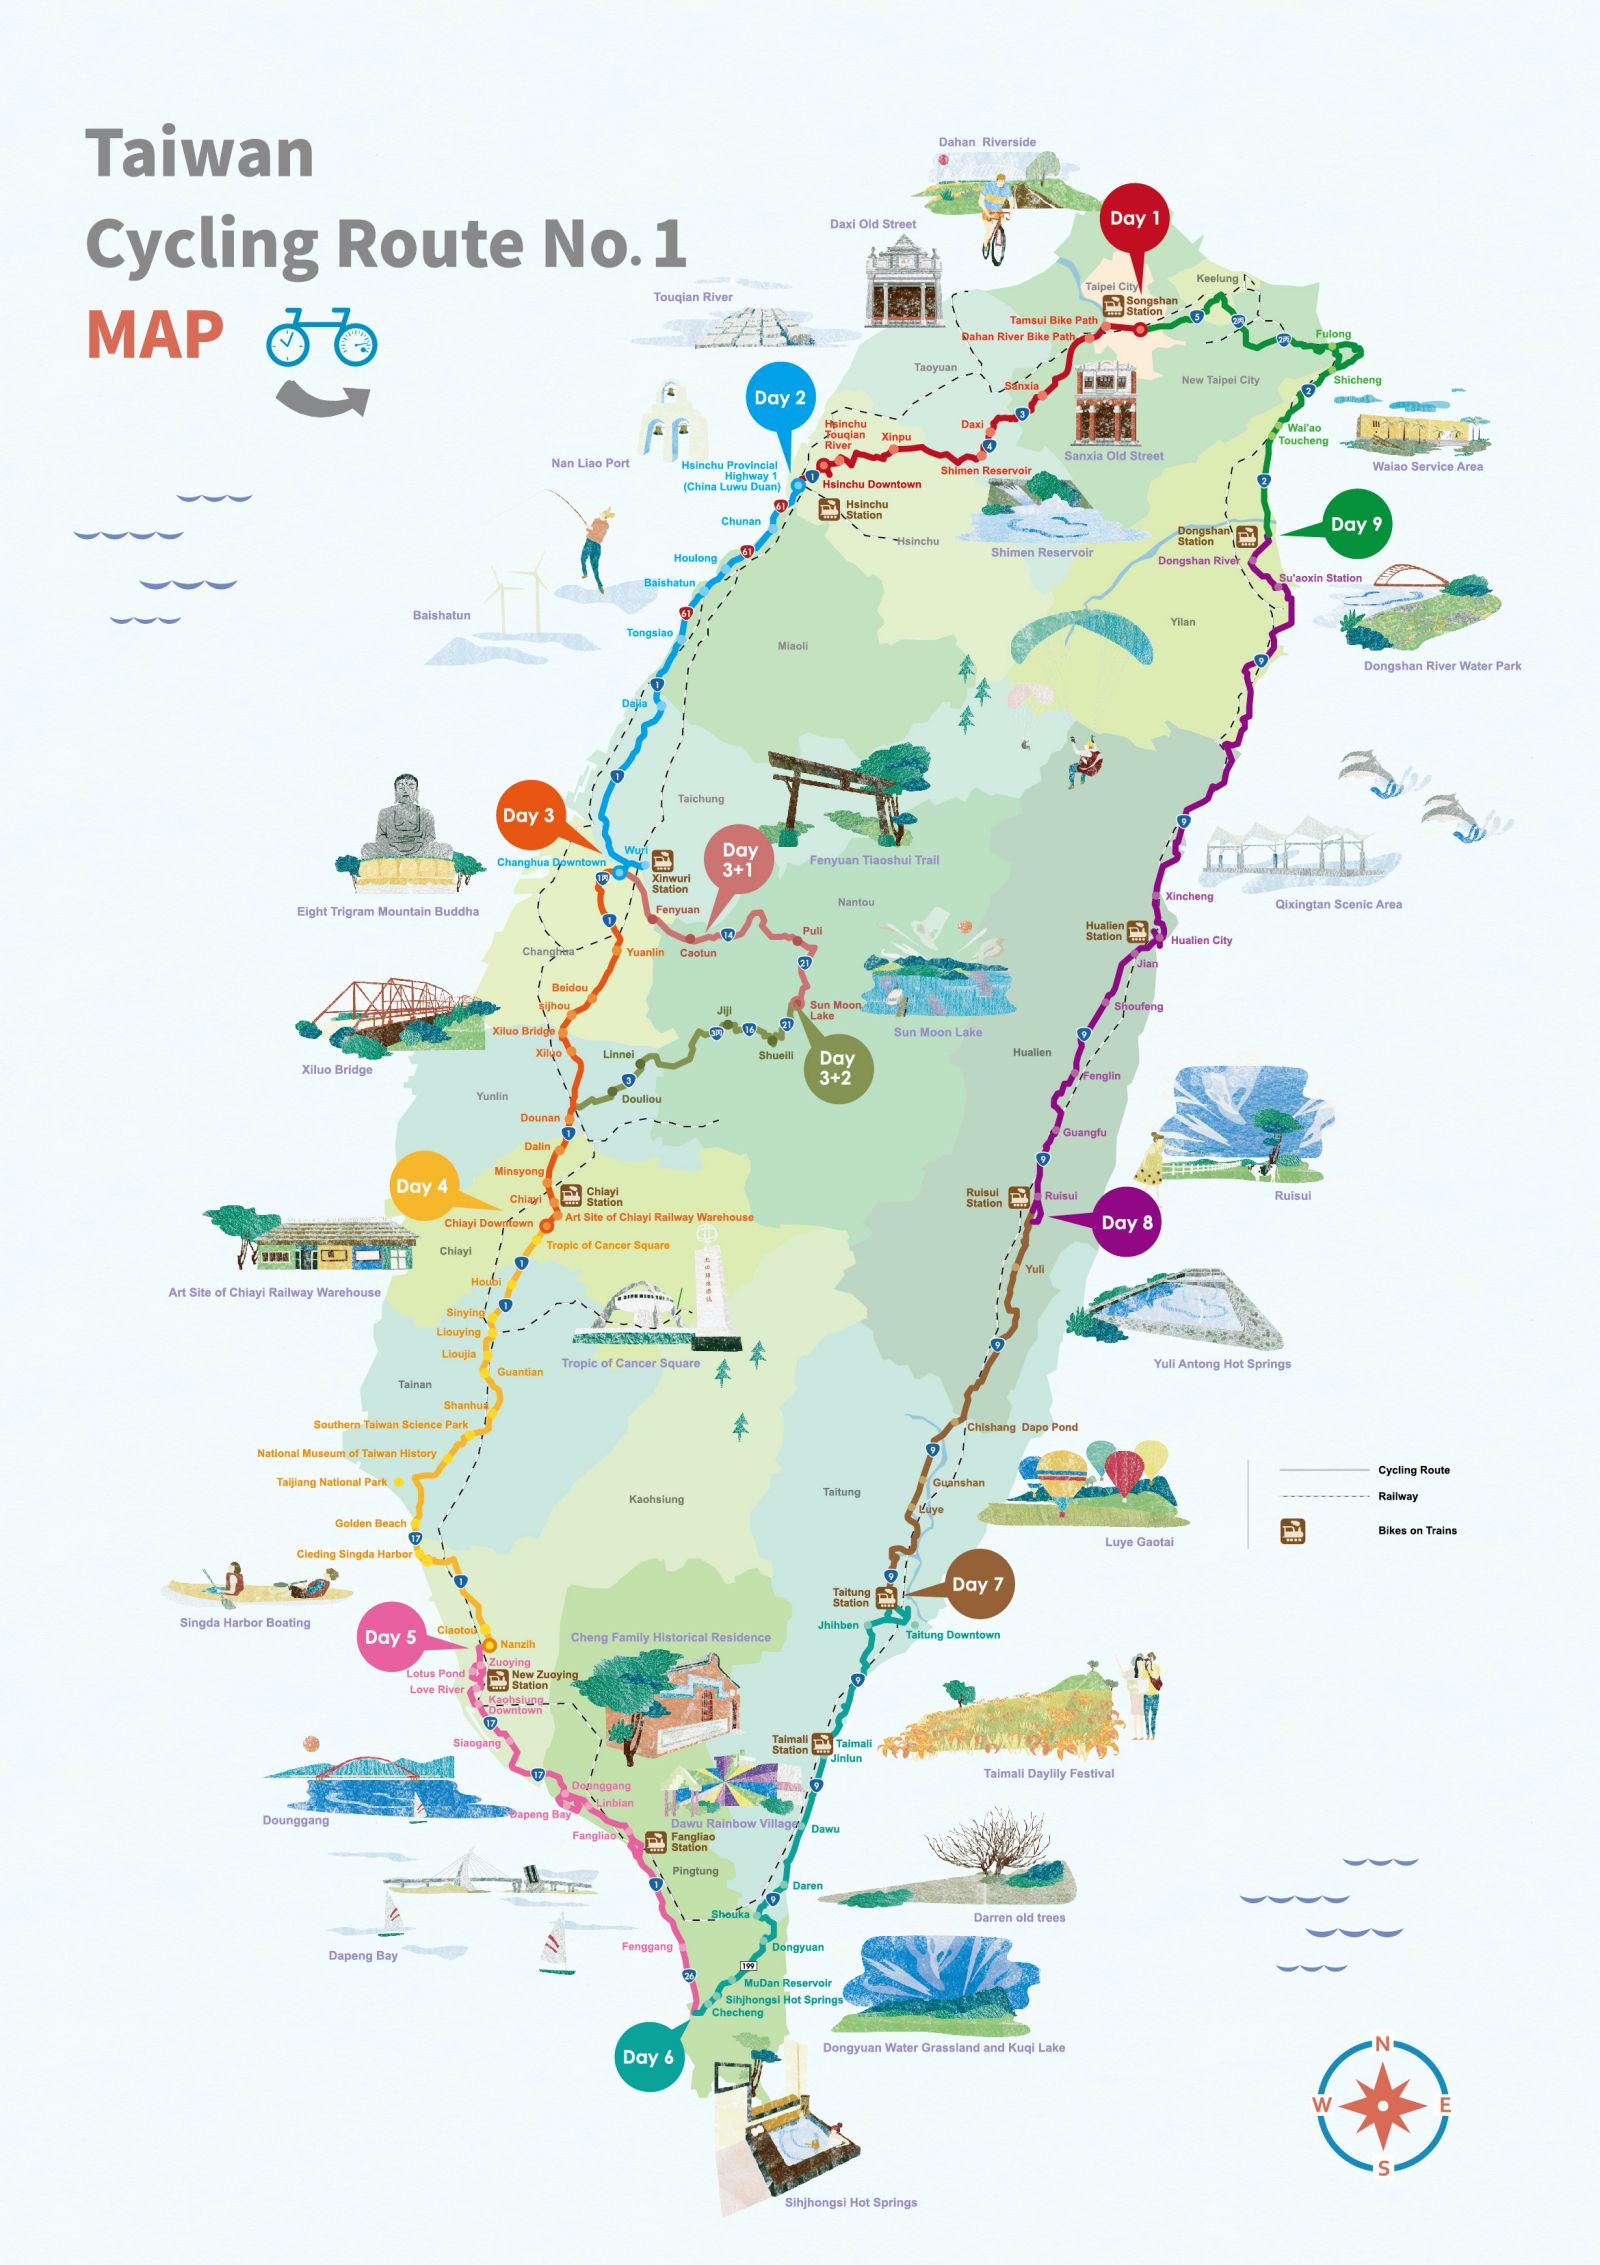 Taiwan Cycling Route No. 1 Full Map